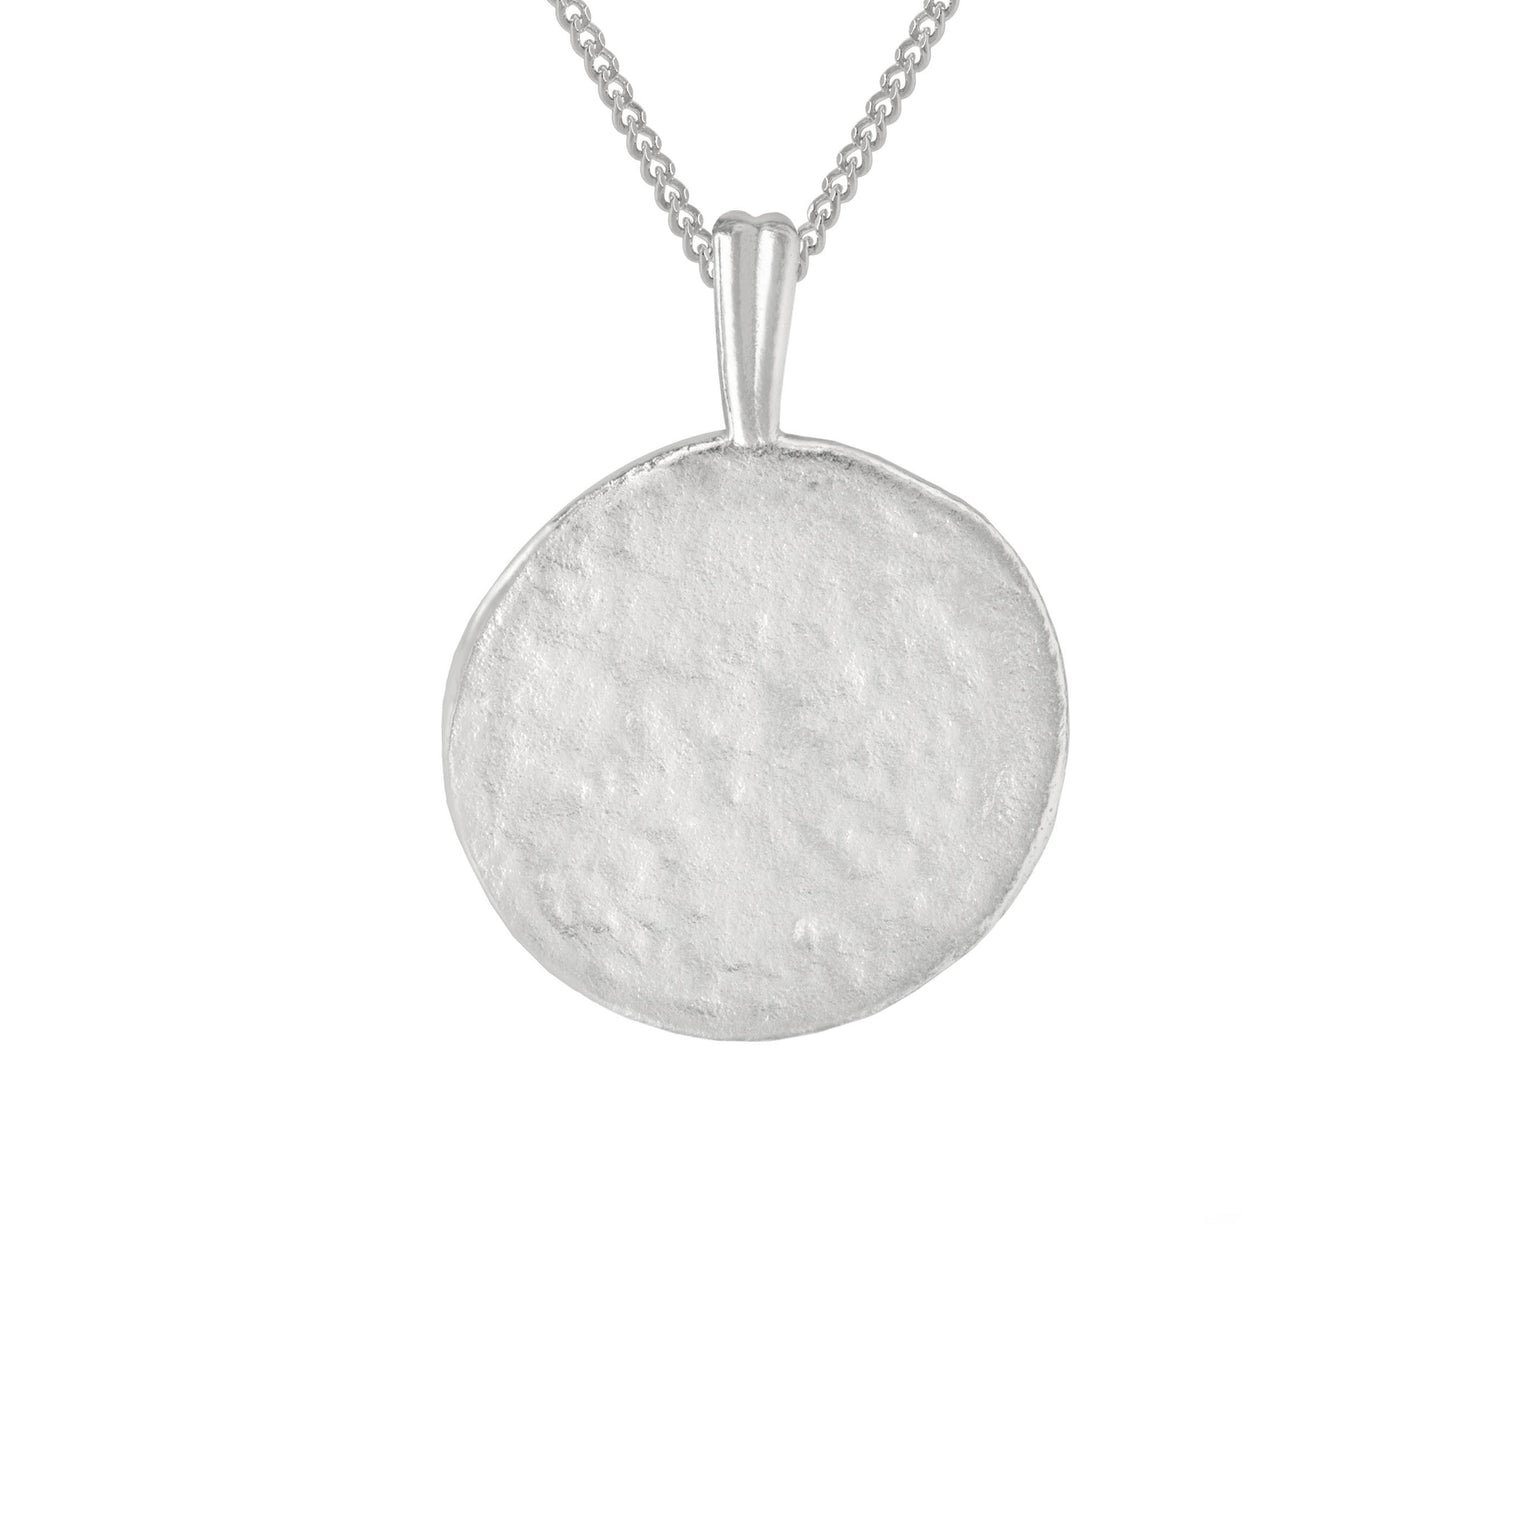 Sagittarius Zodiac Pendant Necklace in Silver back of pendant